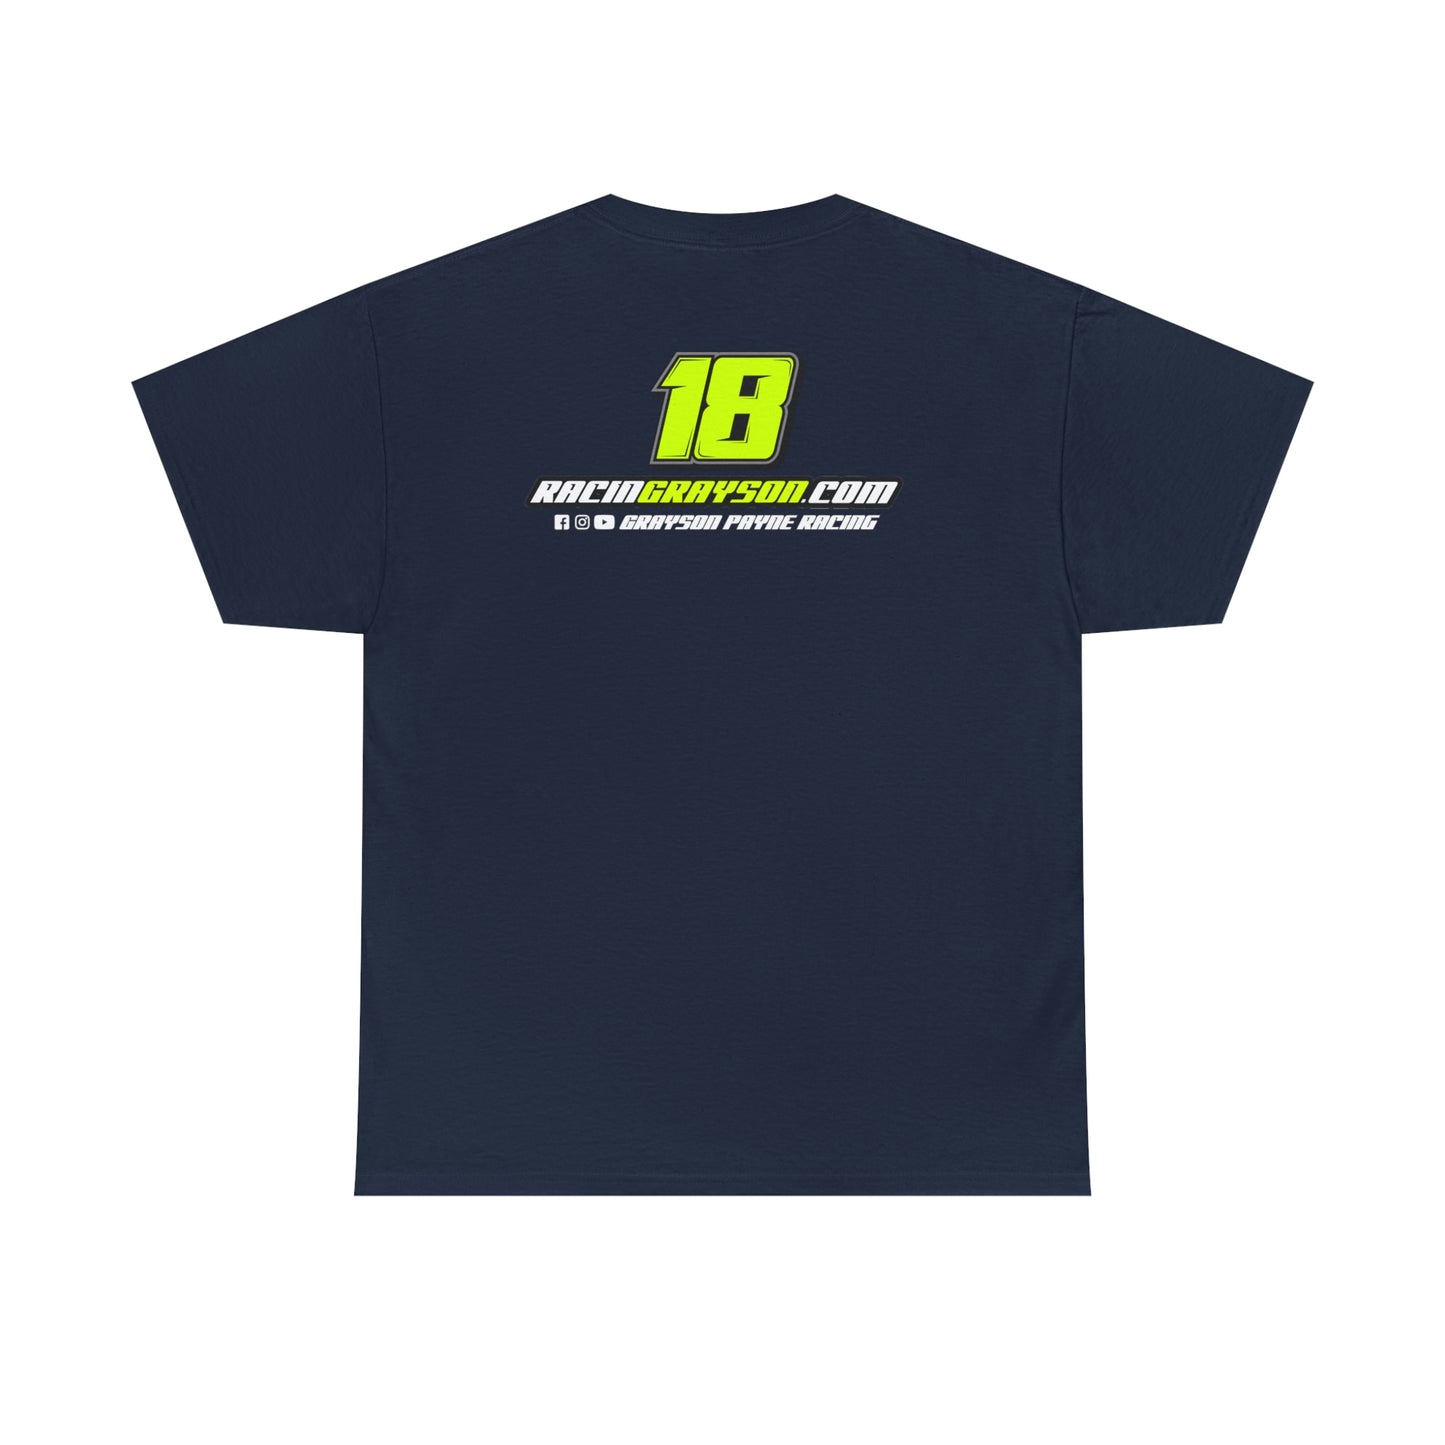 Adult Unisex GPR T-Shirt